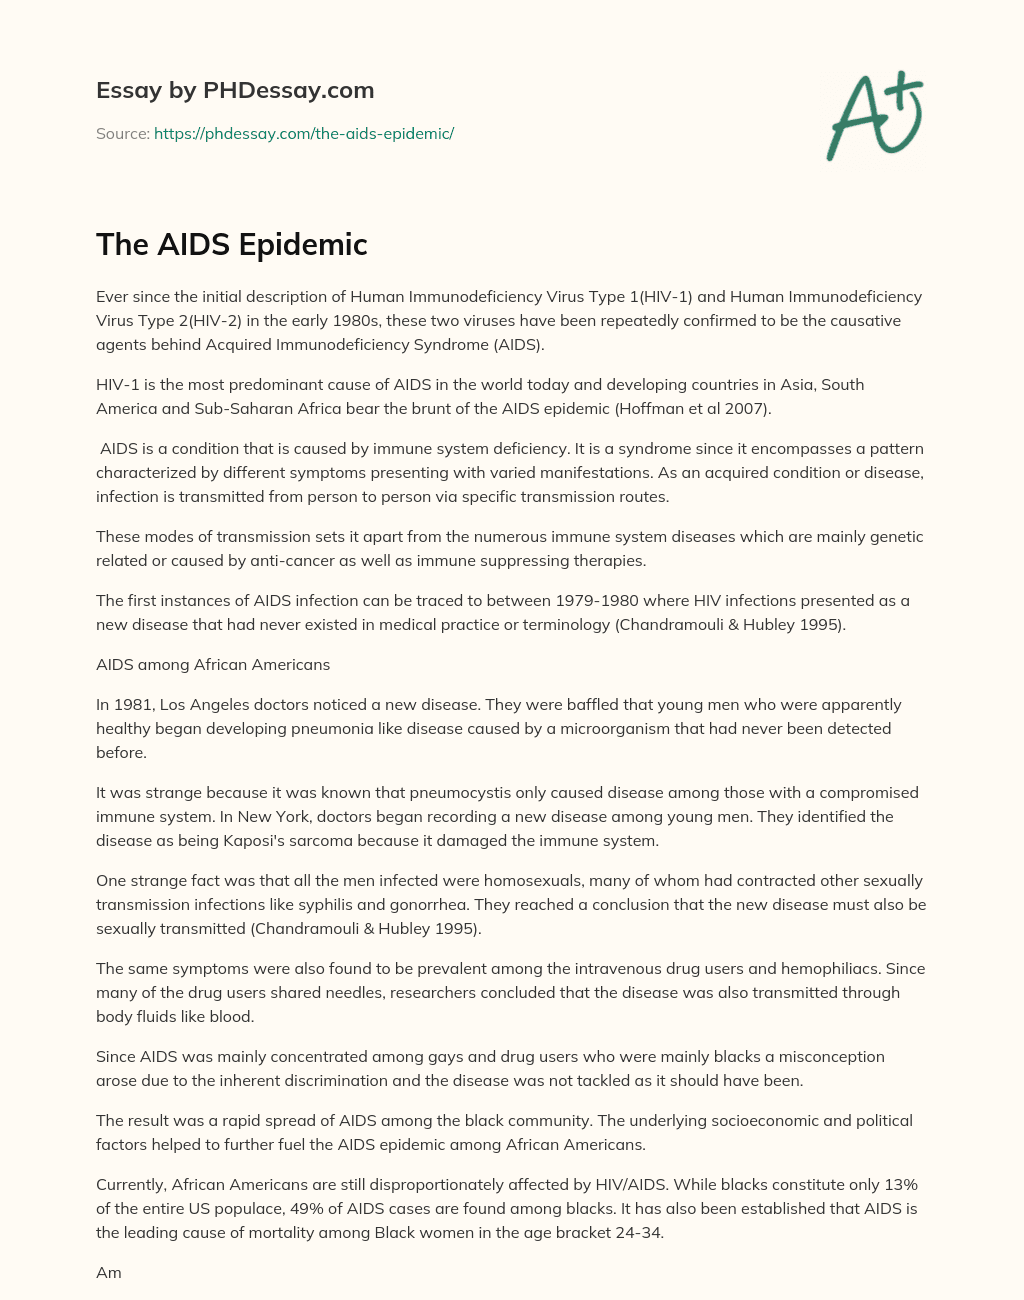 The AIDS Epidemic essay